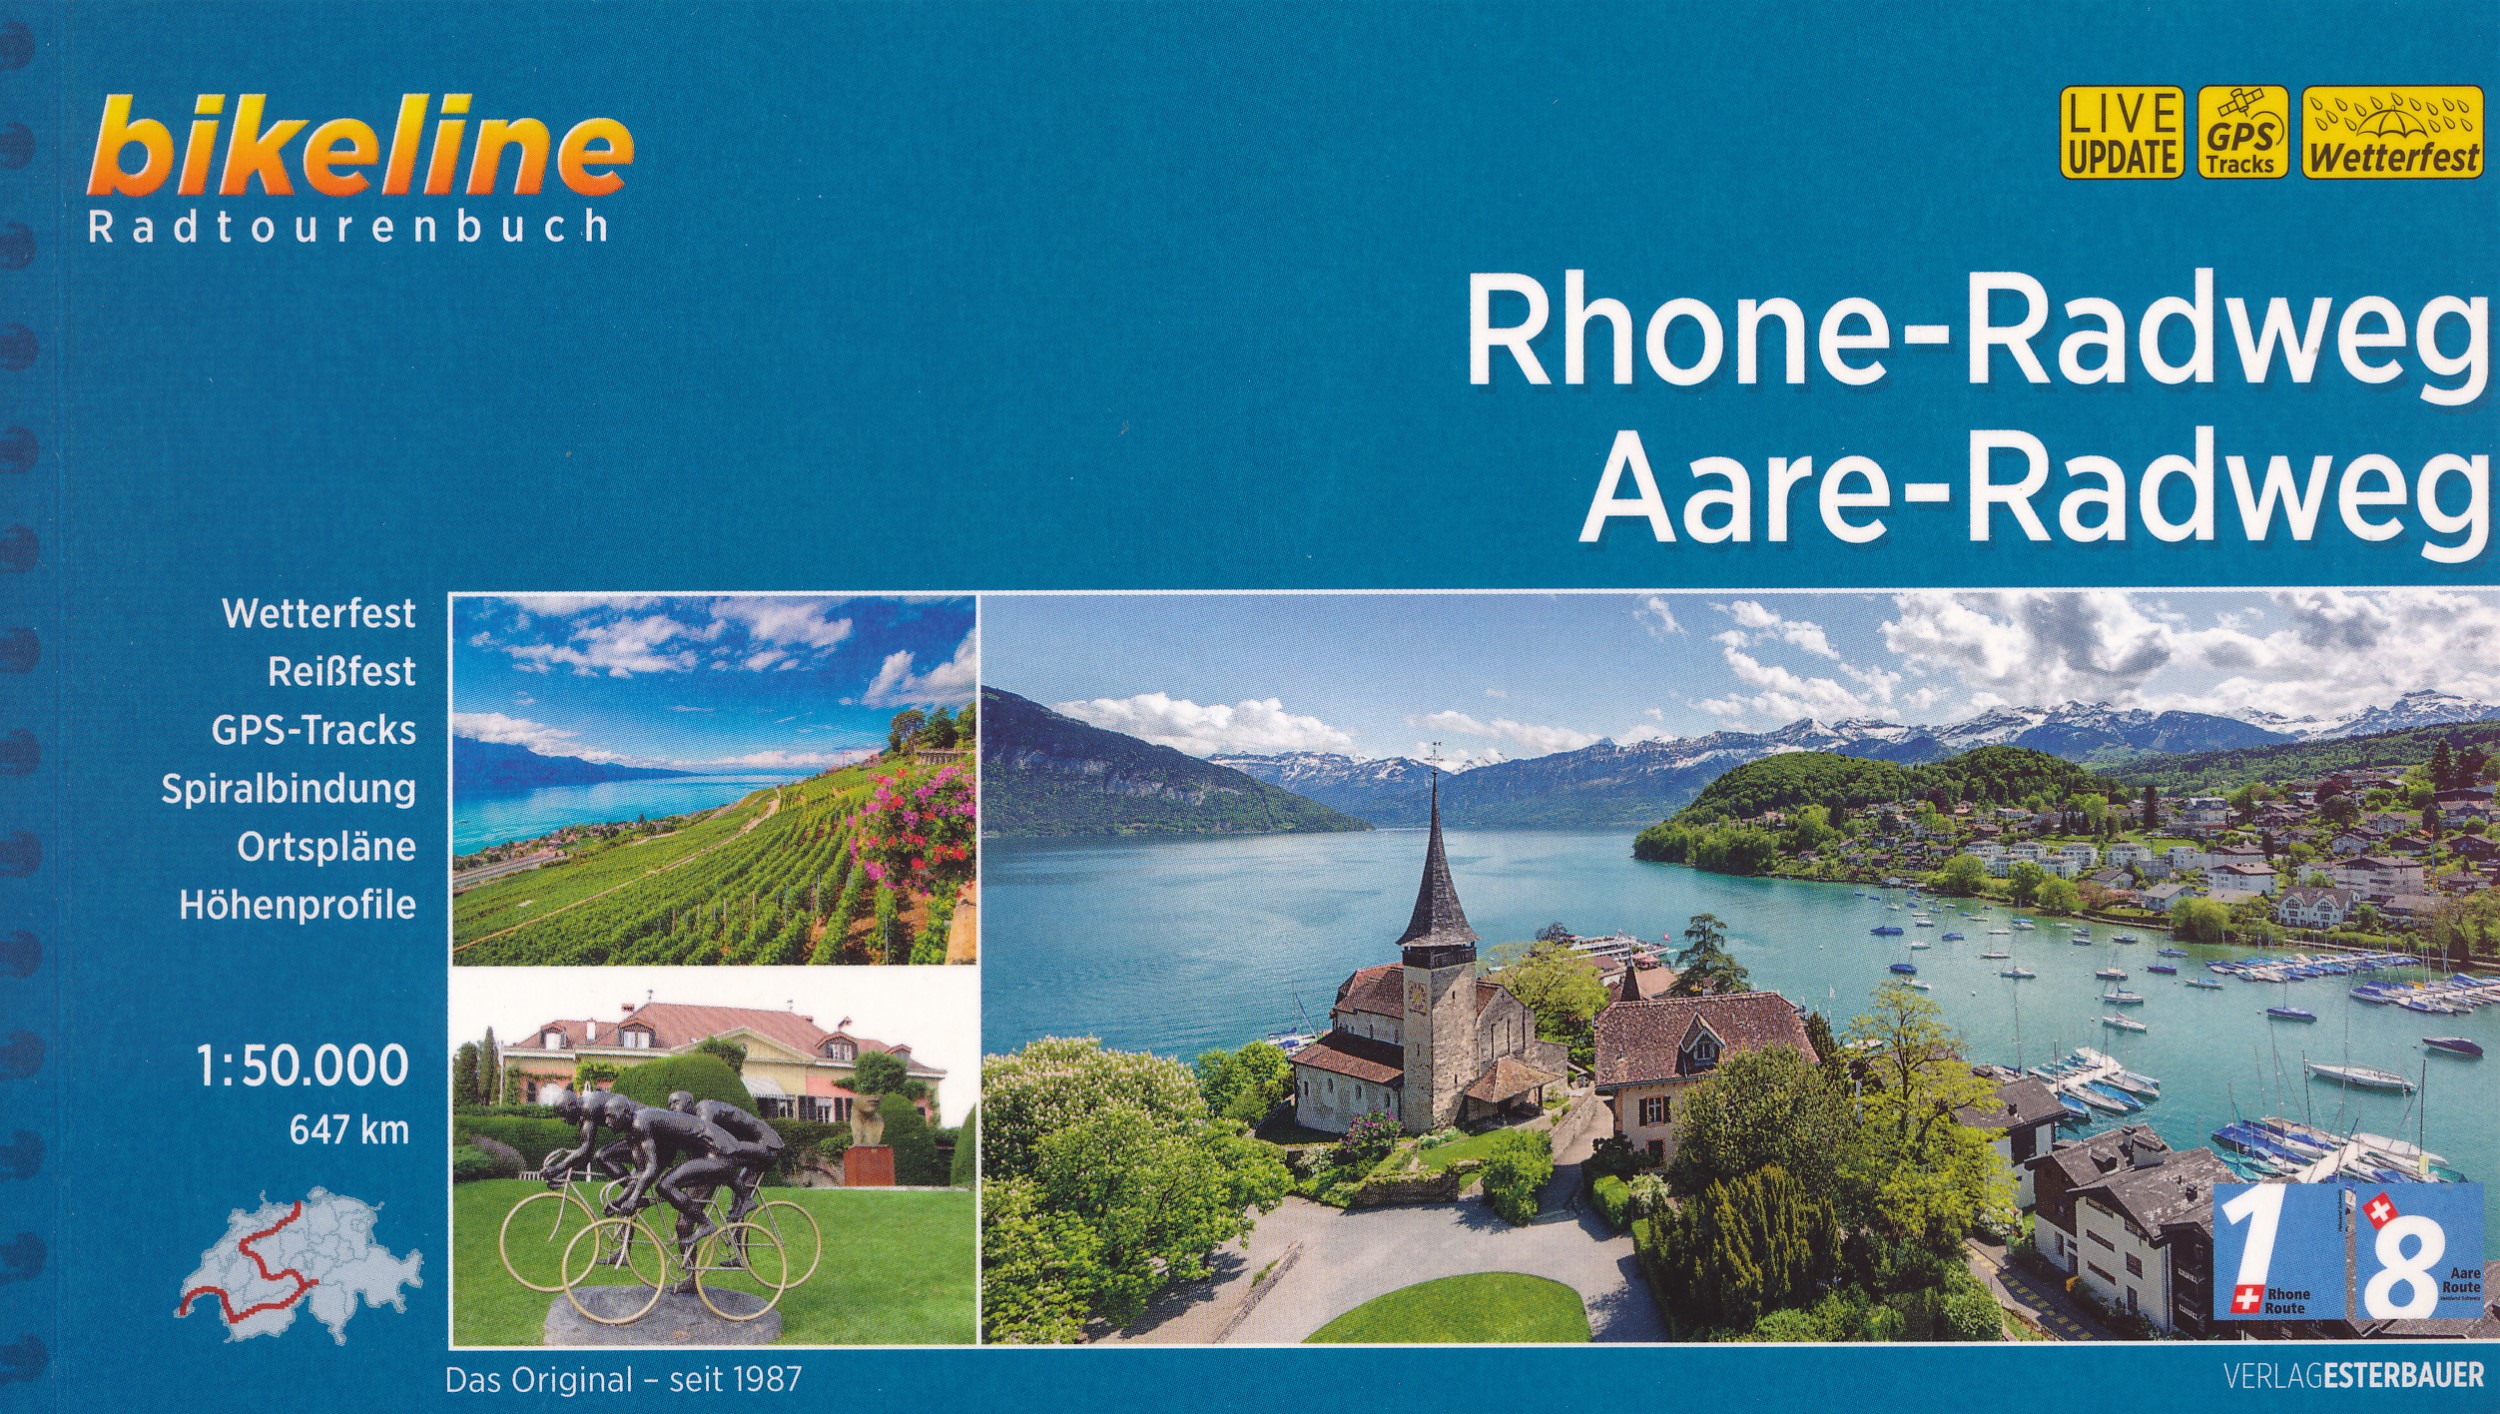 Online bestellen: Fietsgids Bikeline Rhone-Radweg, Aare-Radweg | Esterbauer